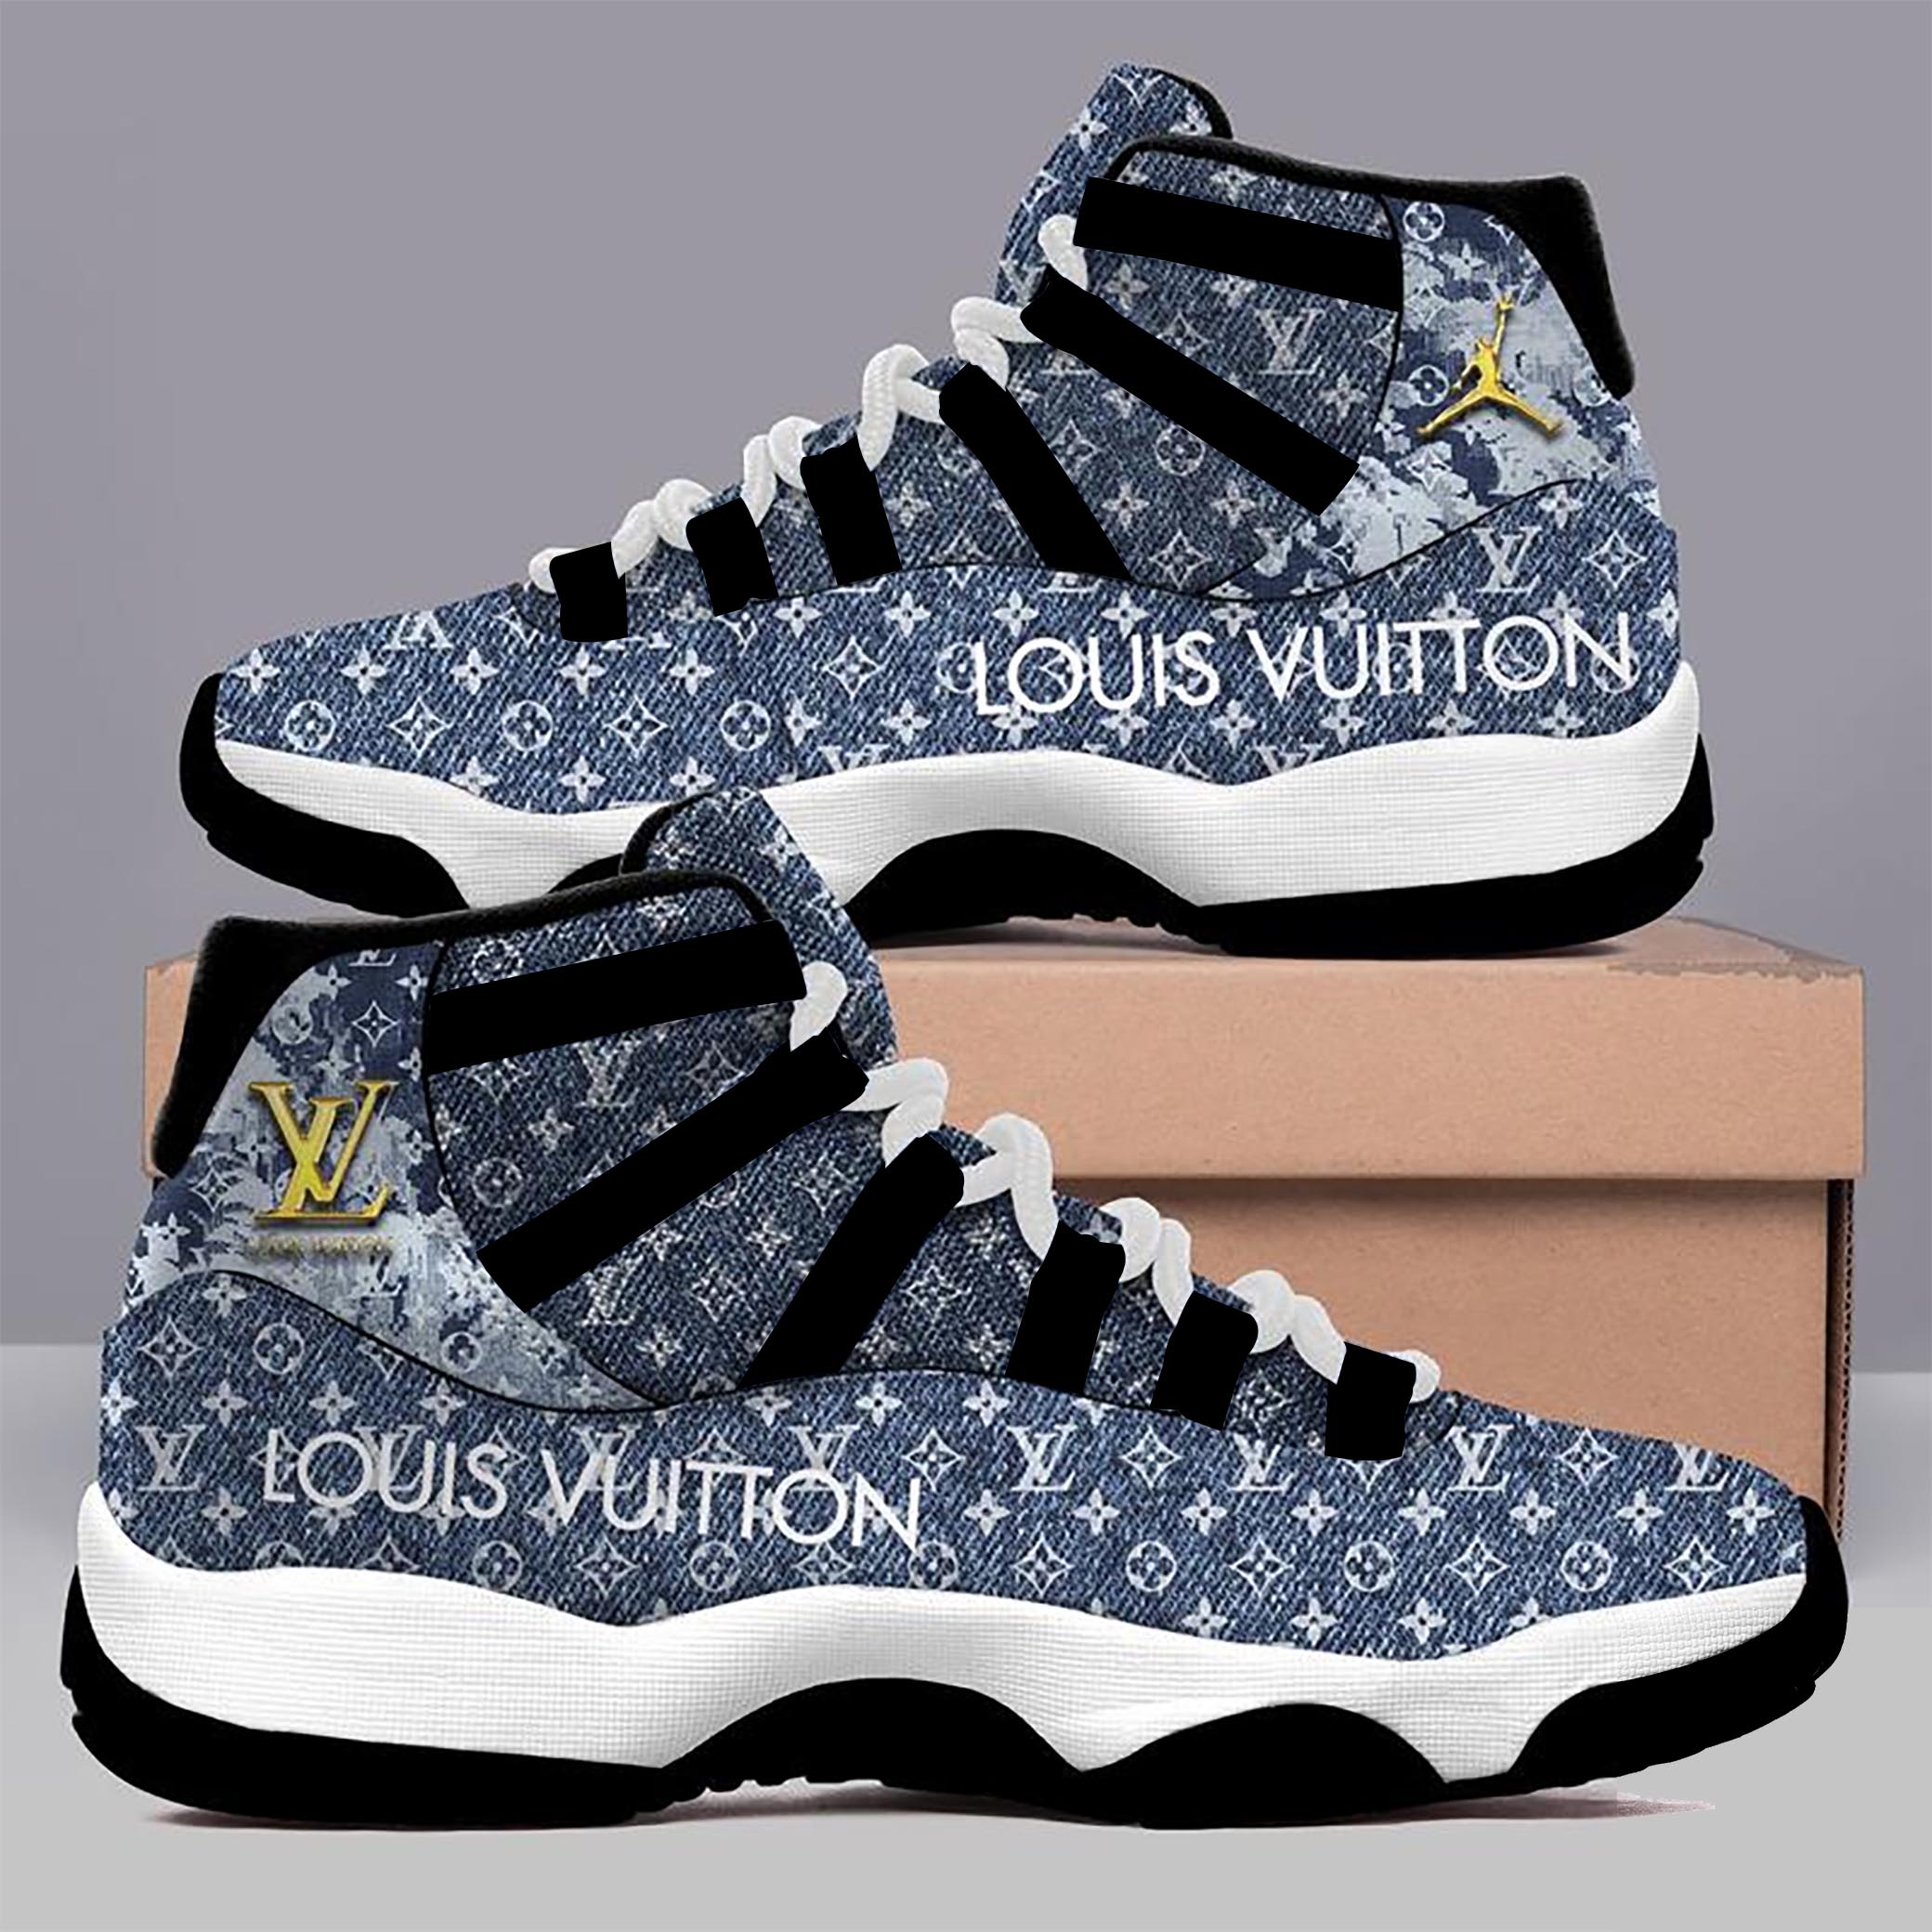 Louis Vuitton Denim Monogram Air Jordan 11 Sneakers Shoes Hot 2022 LV Gifts For Men Women HT